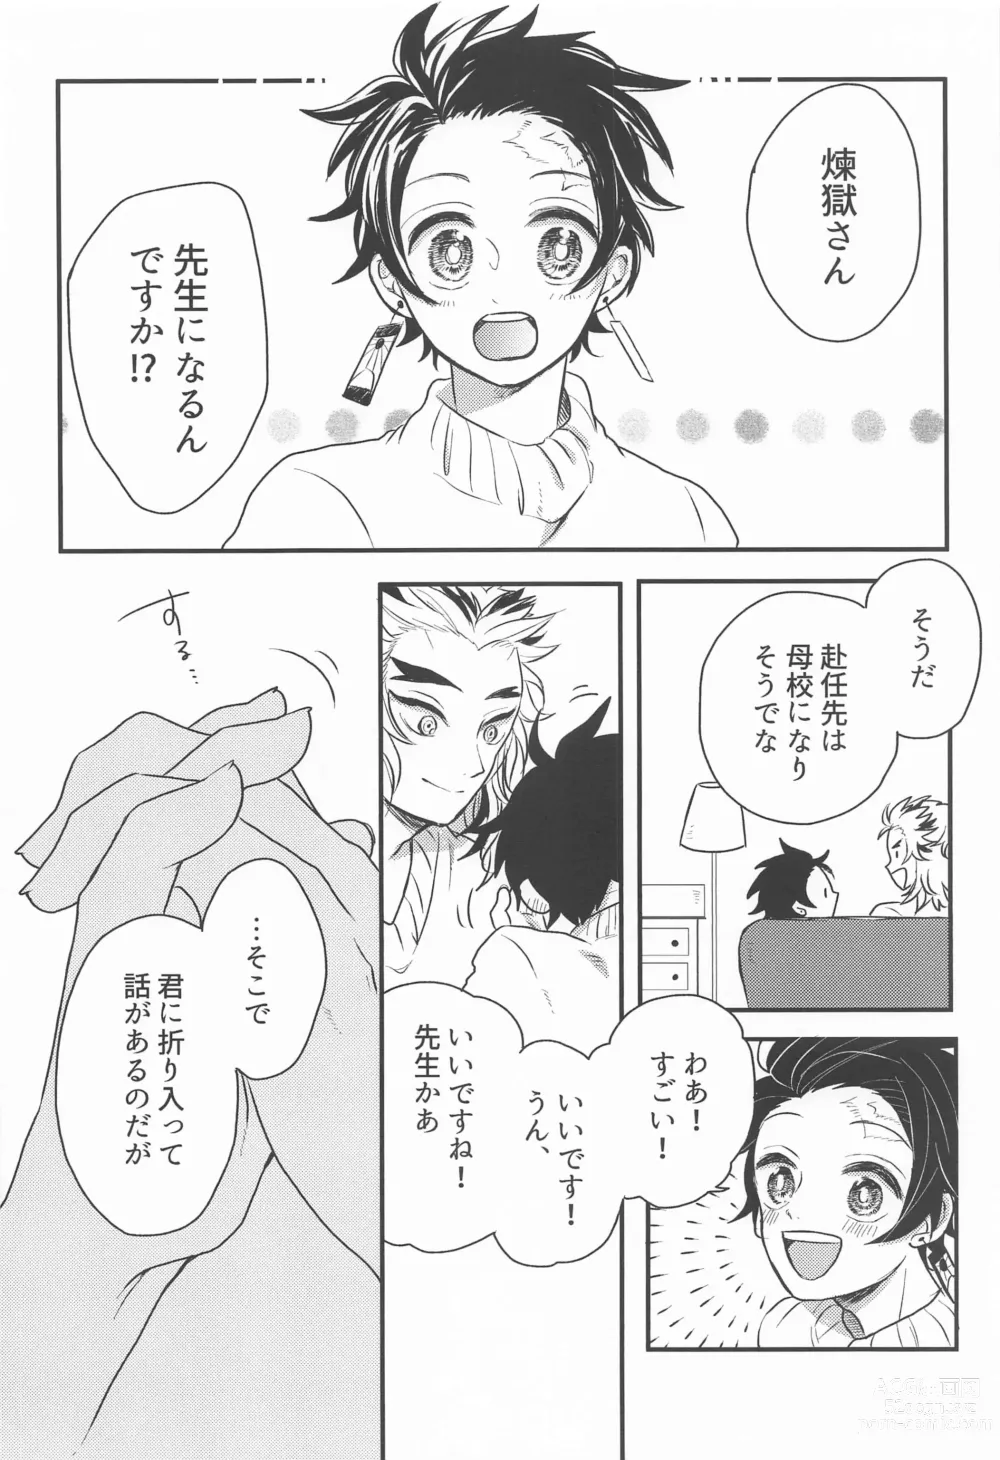 Page 7 of doujinshi Madogiwa no Rinjin To Fuyu no Hi